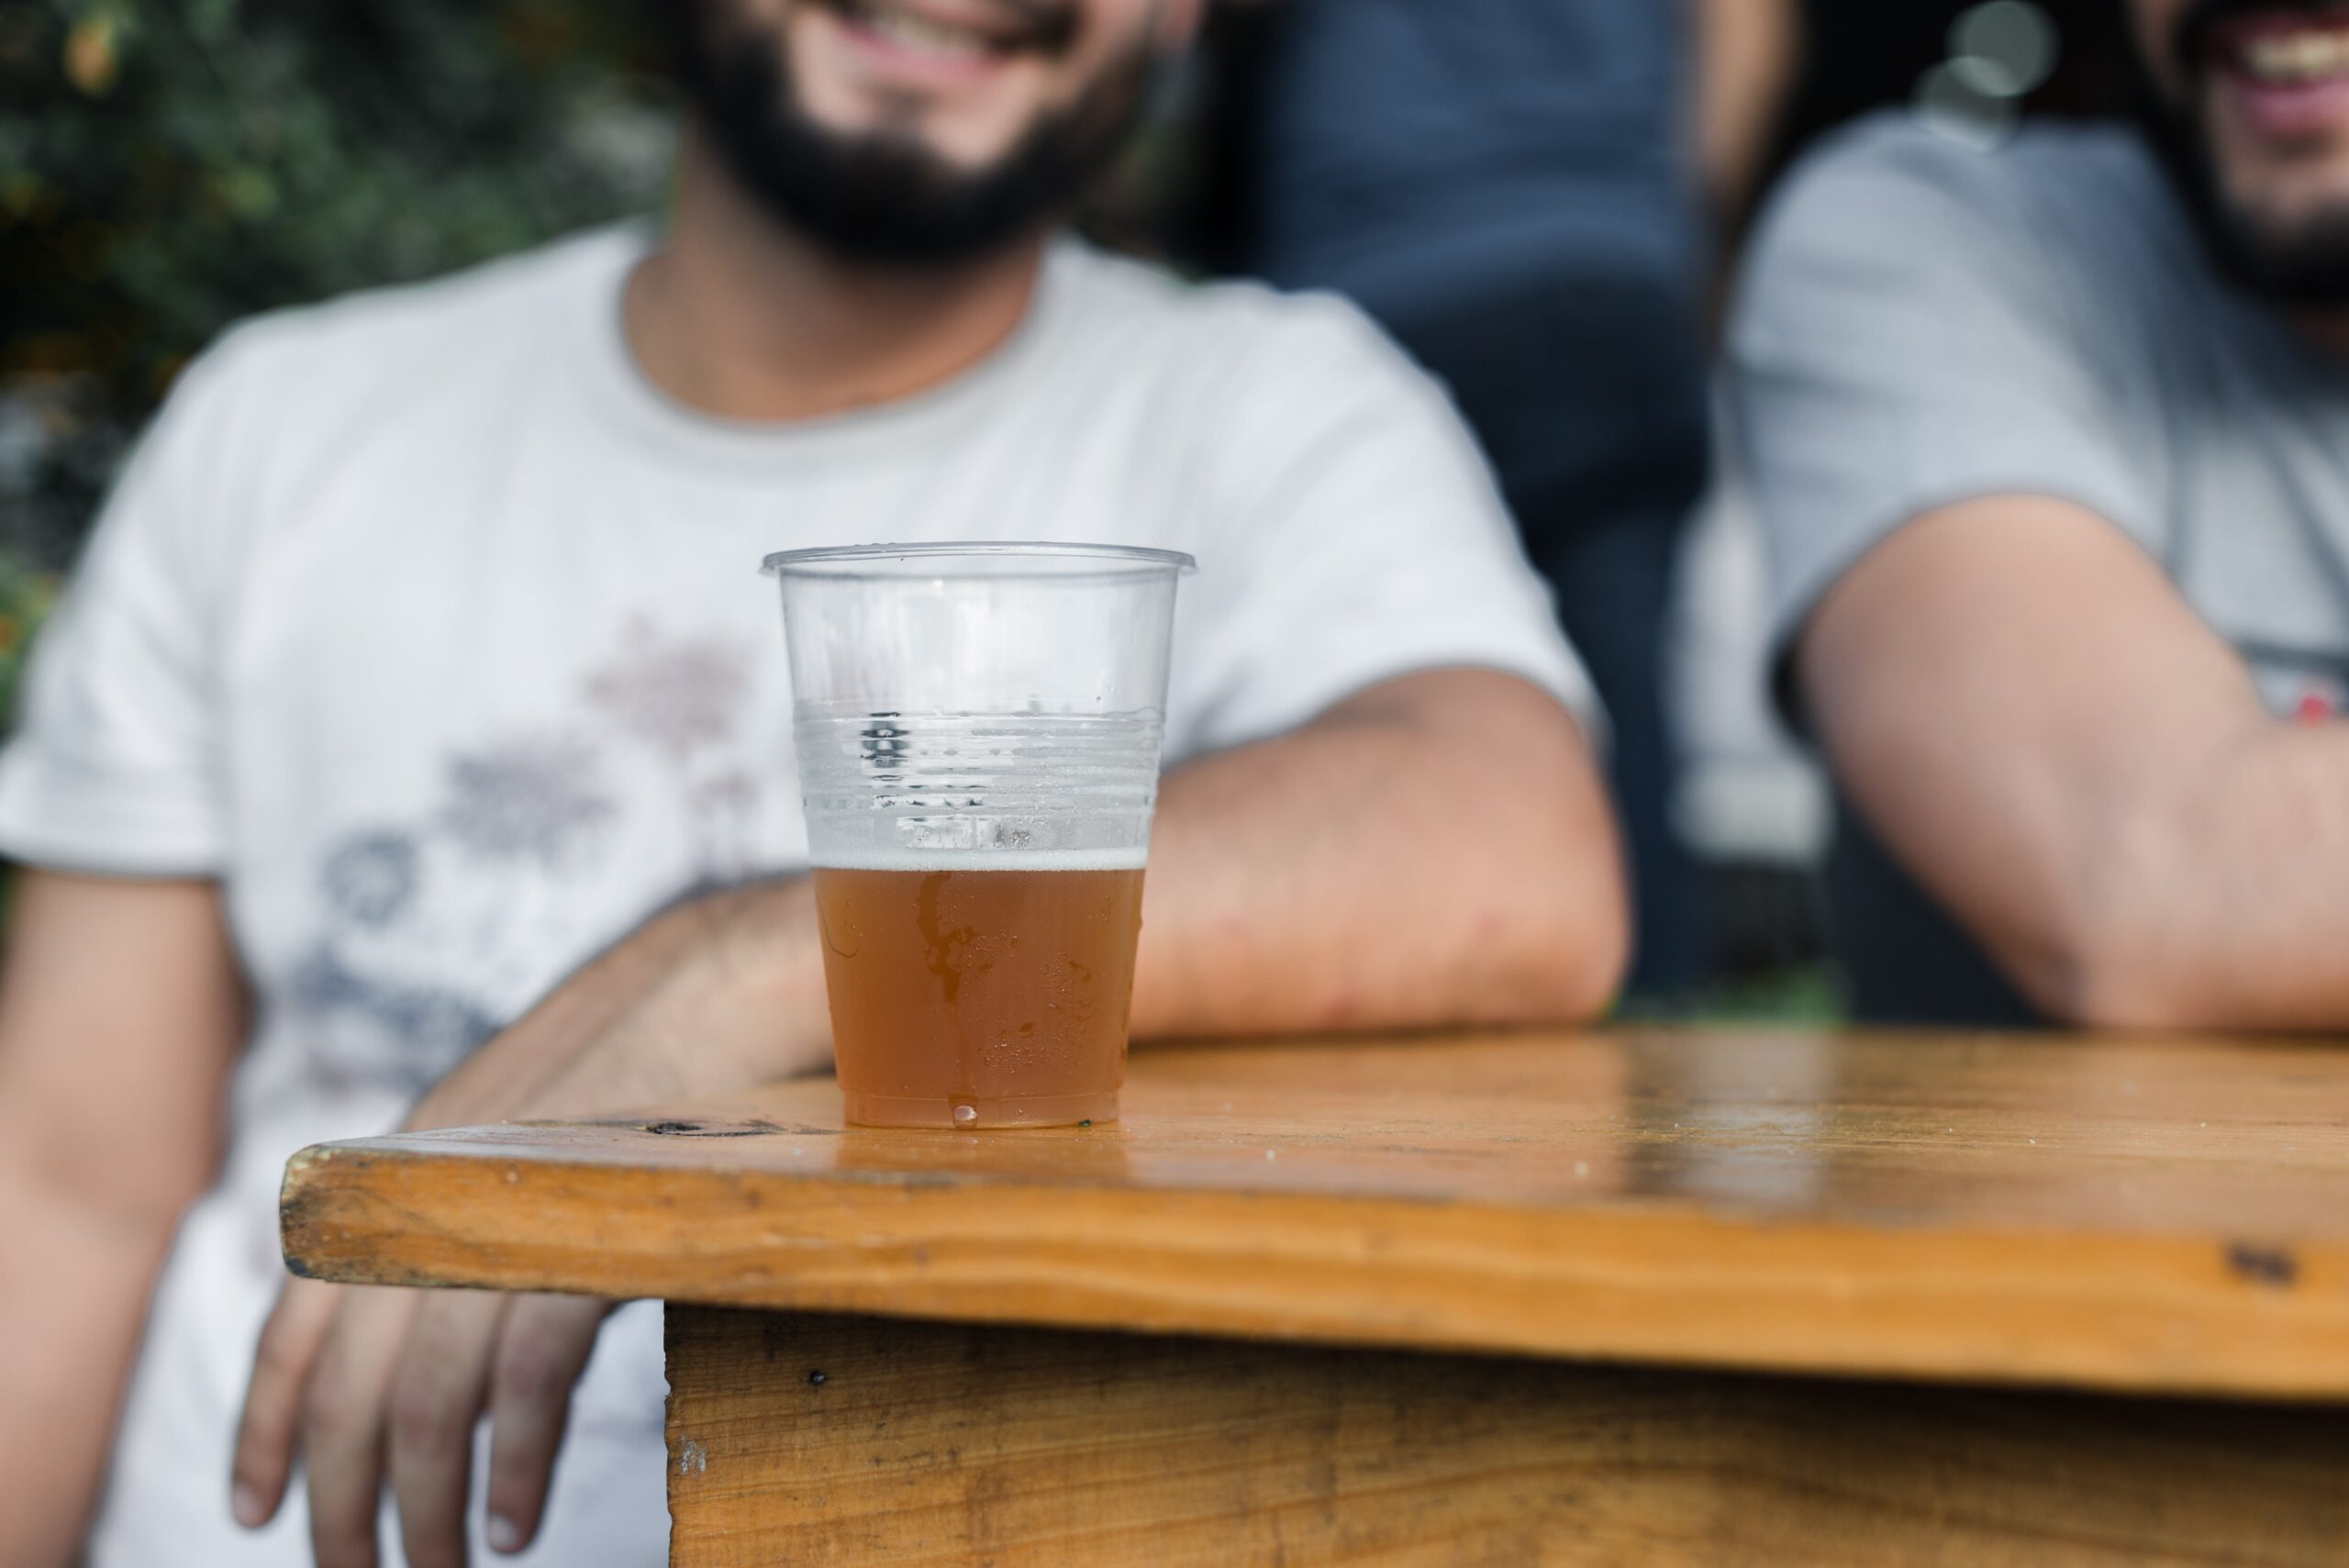 Festival Cerveza Artesana Oviedo 2021: ¡Descubre los Mejores Sabores!